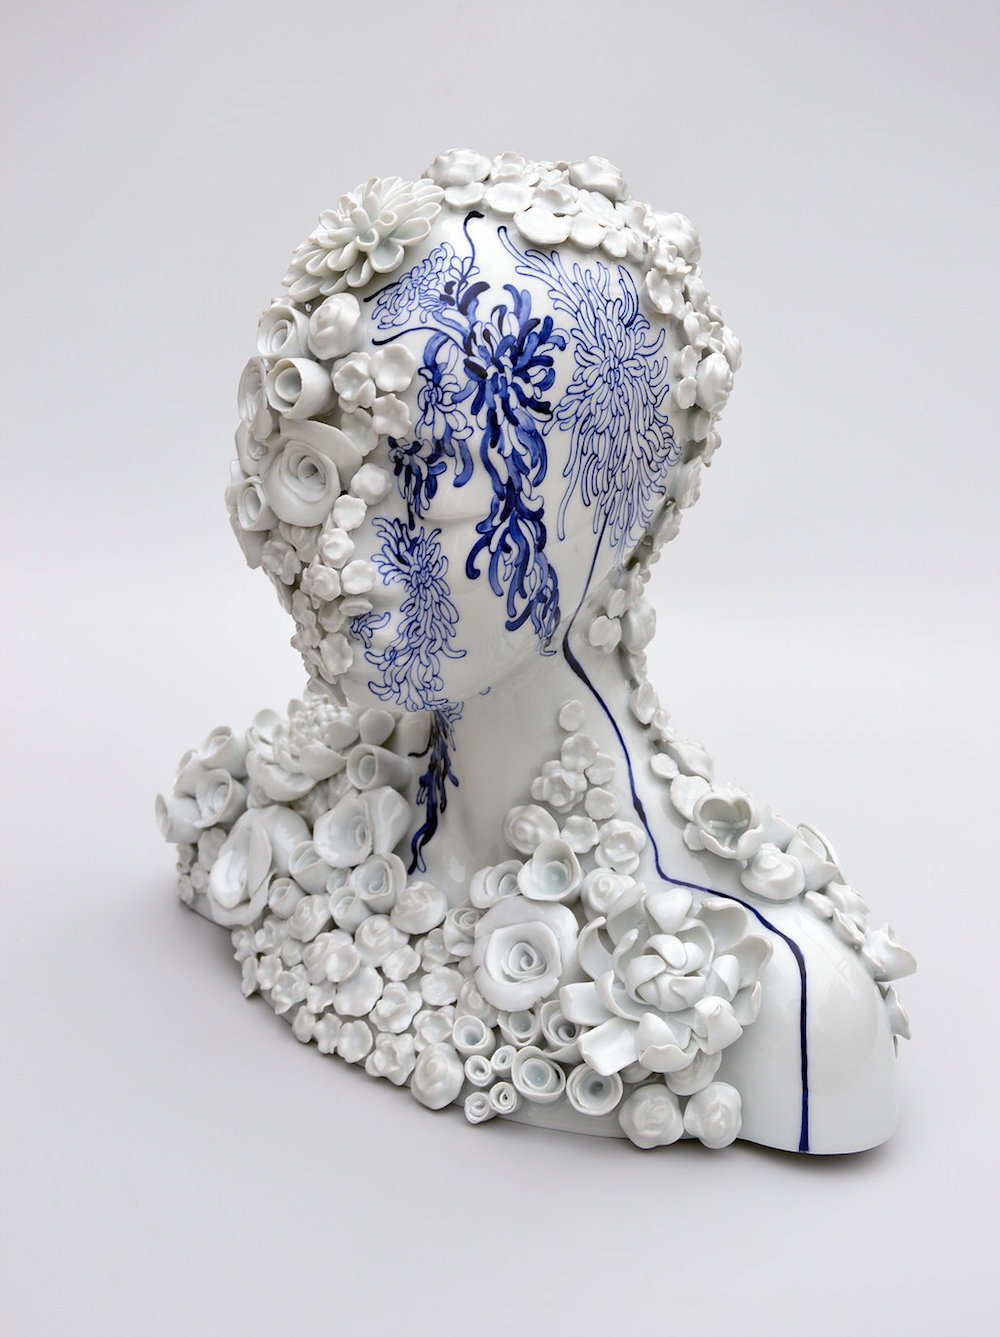 surreal porcelain sculptures